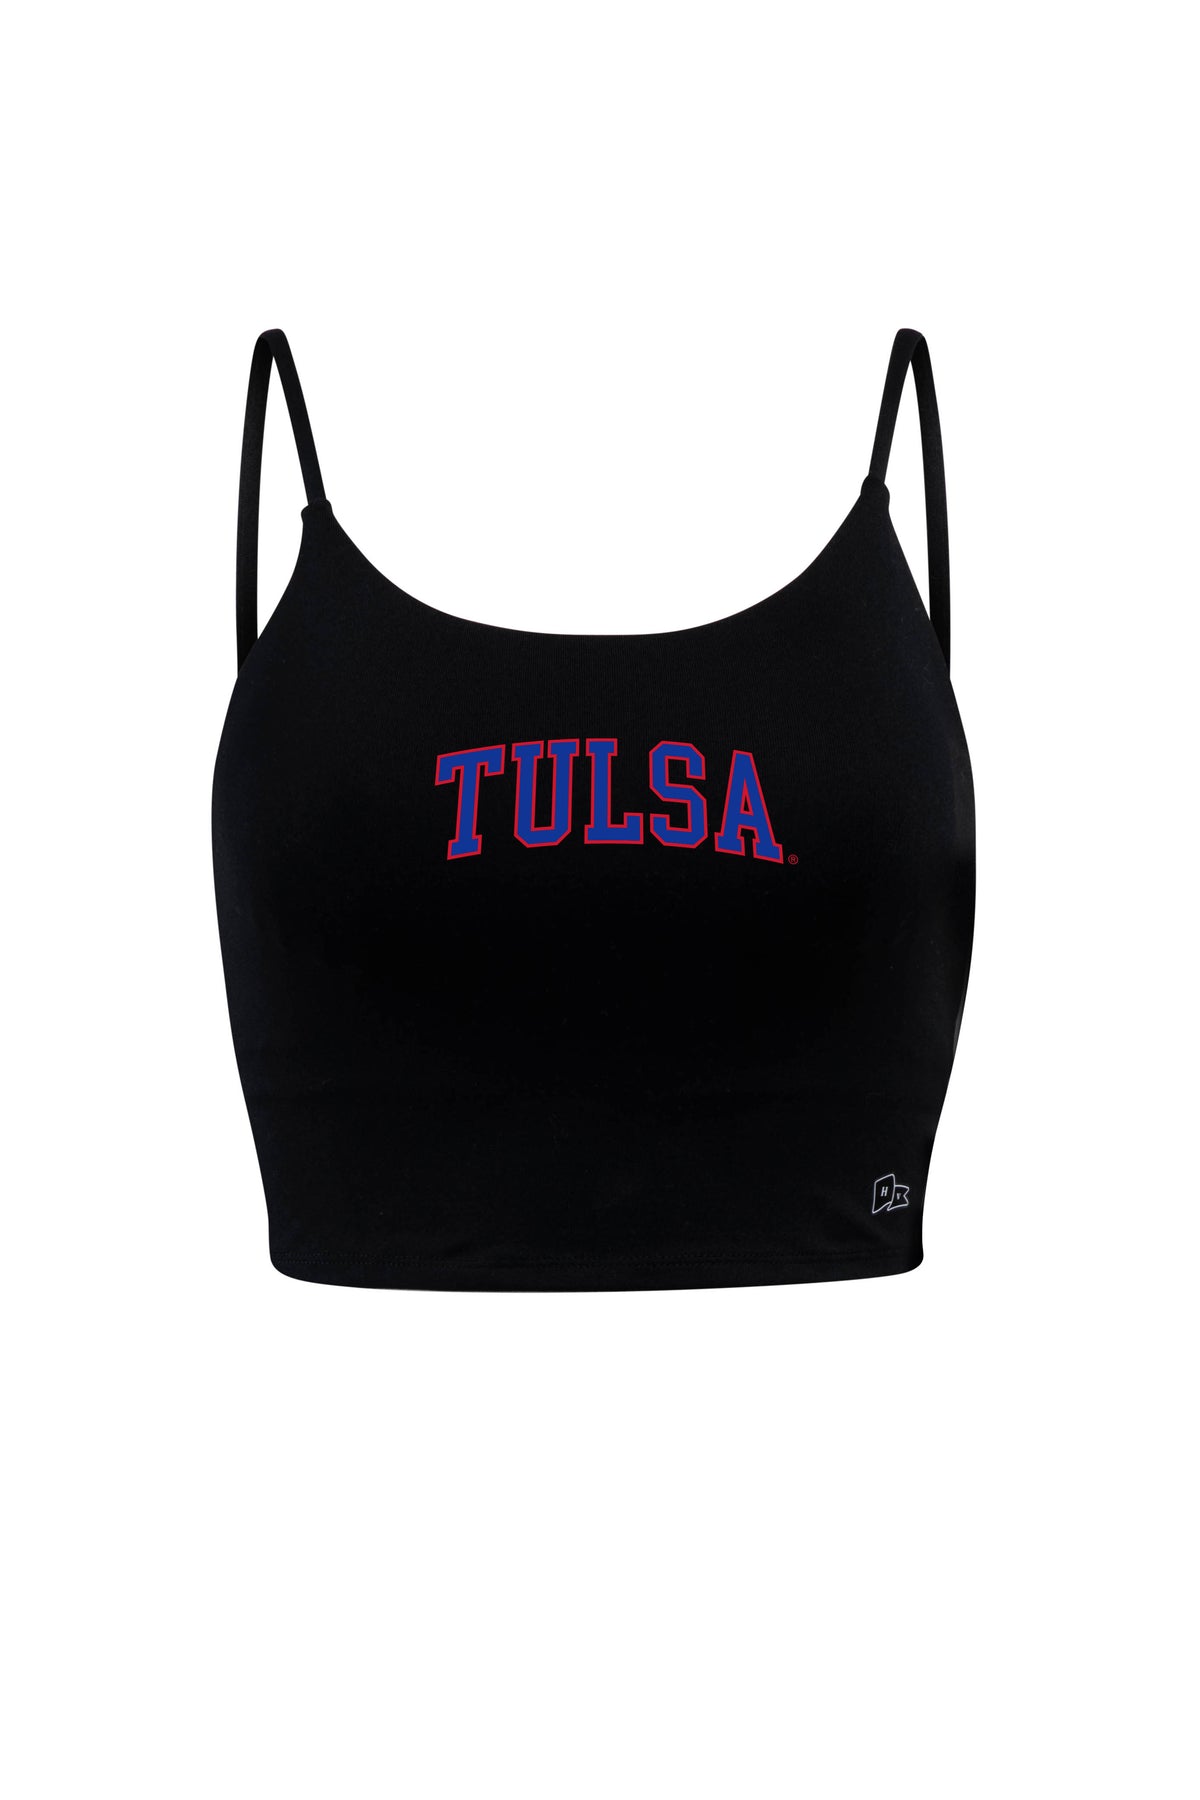 University of Tulsa Bra Tank Top